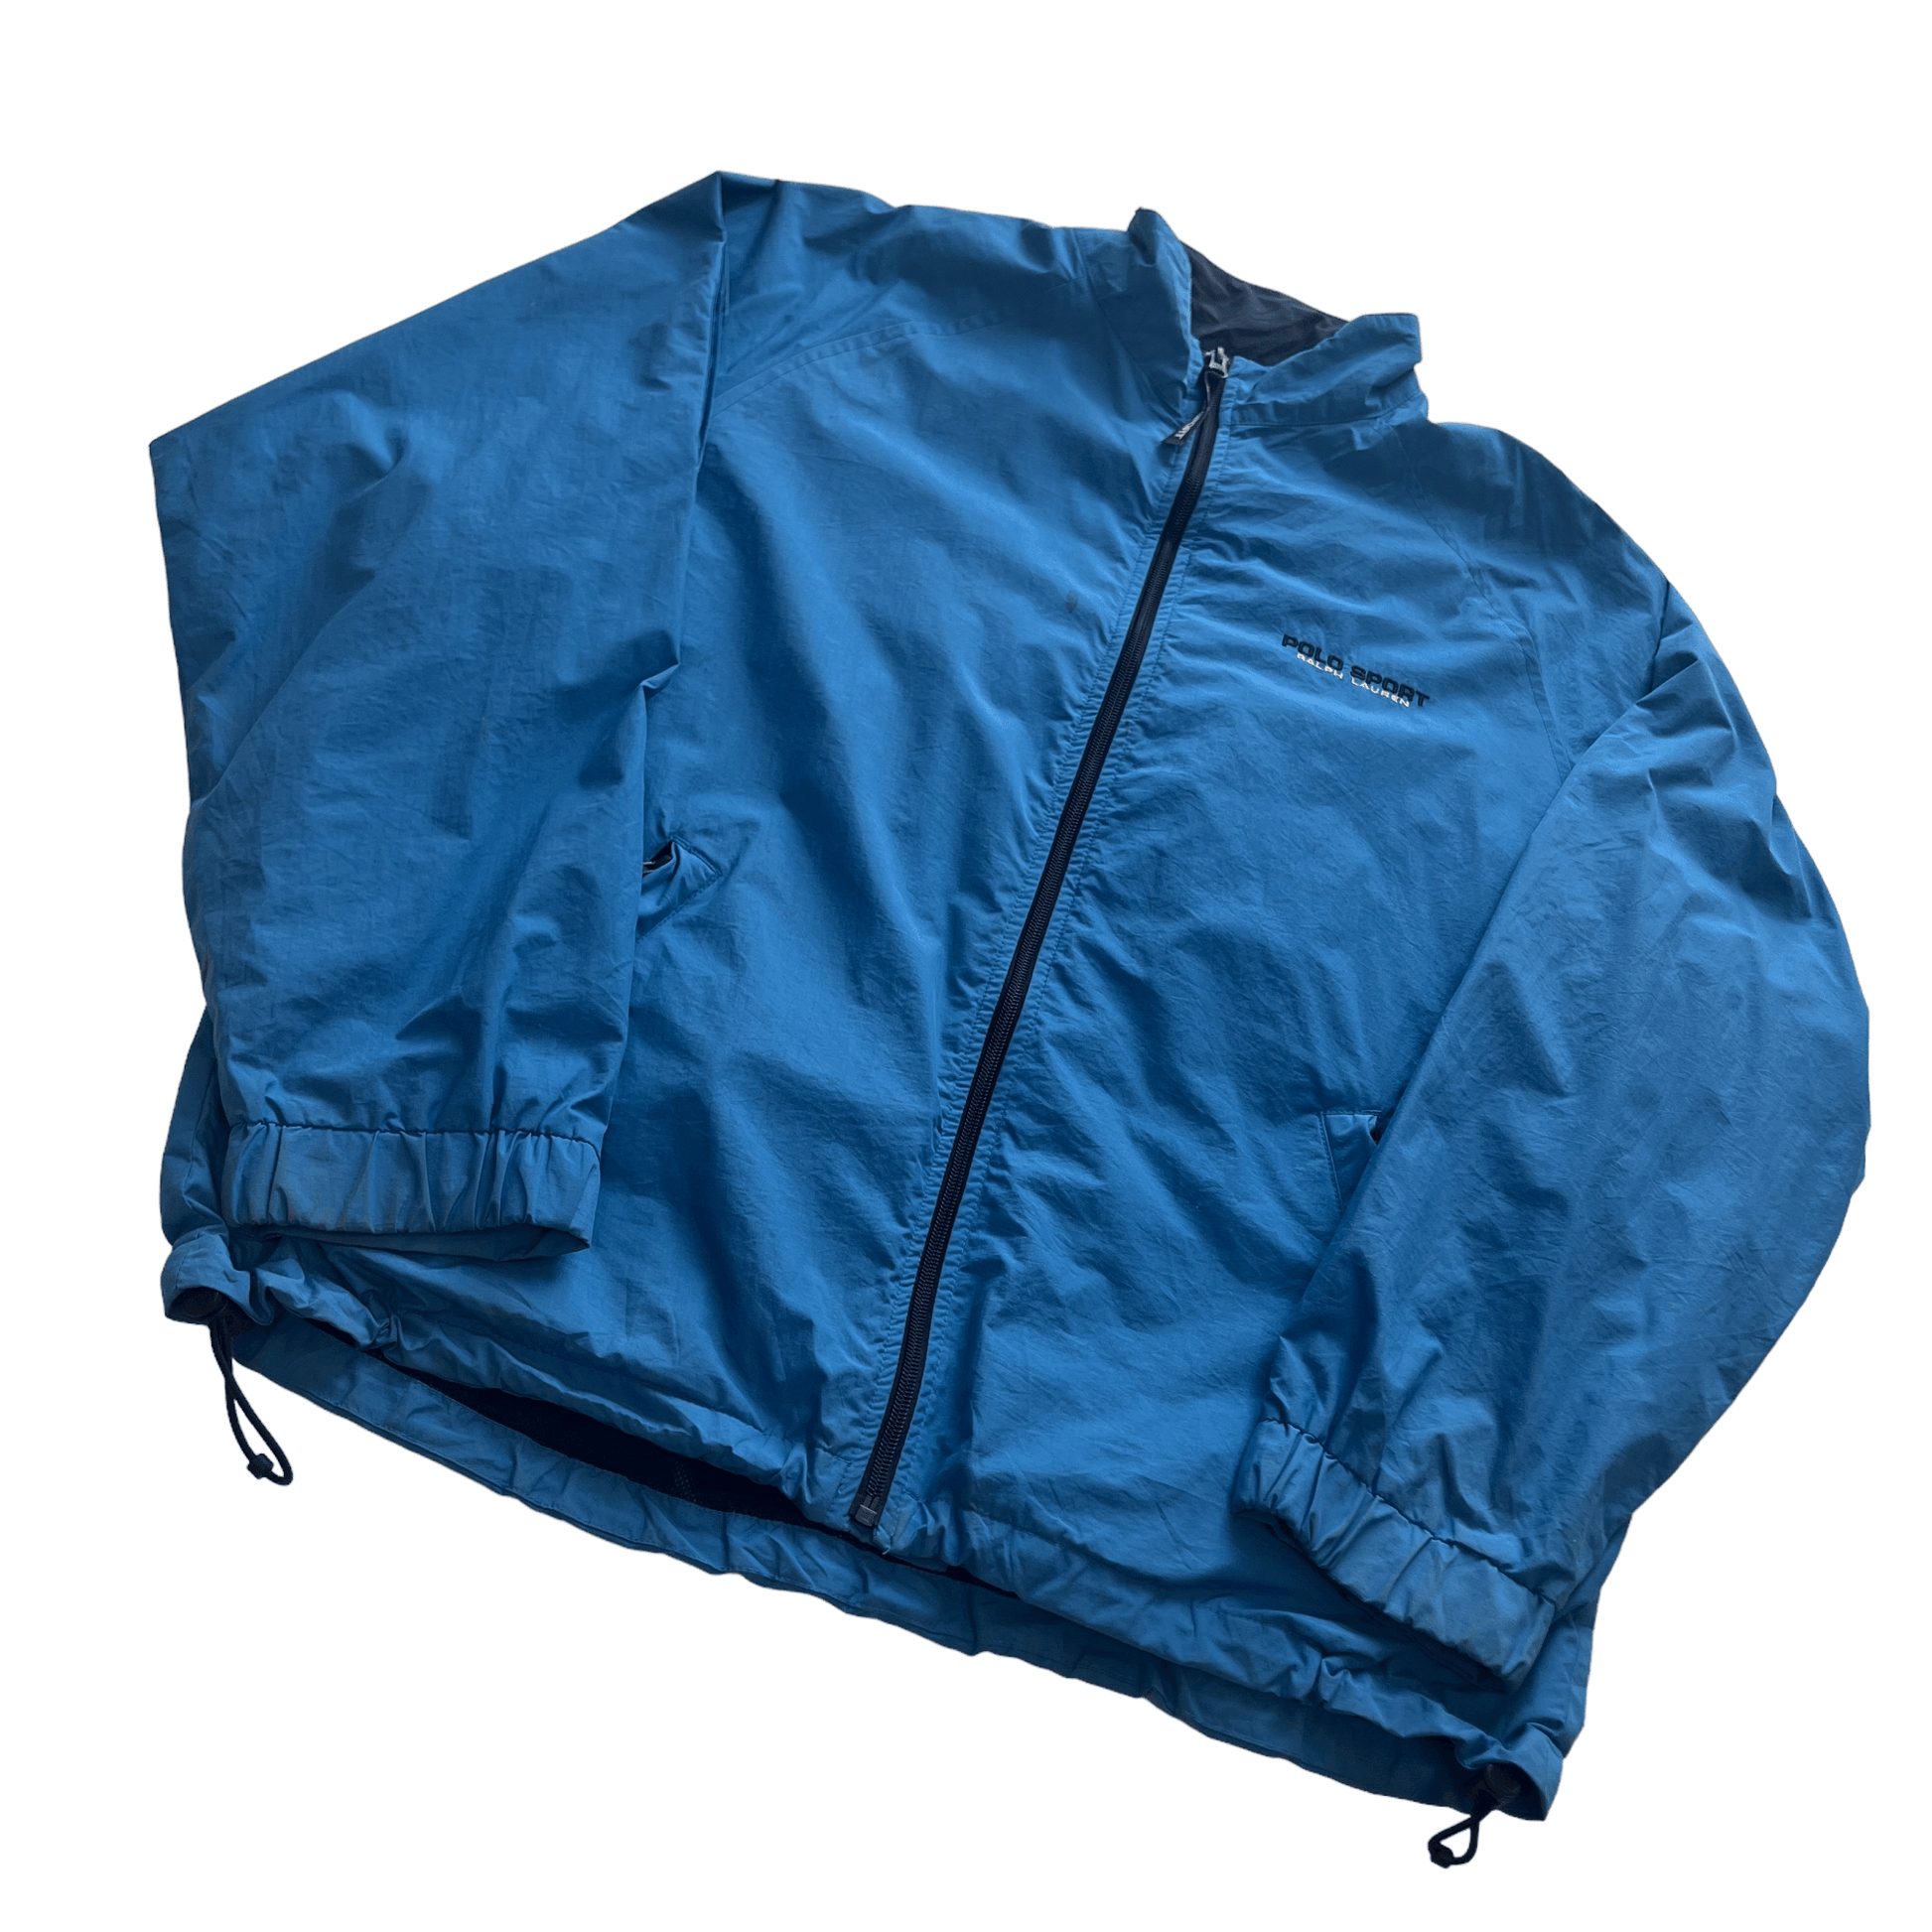 Vintage 90s Blue Ralph Lauren Polo Sport Jacket - Medium - The Streetwear Studio